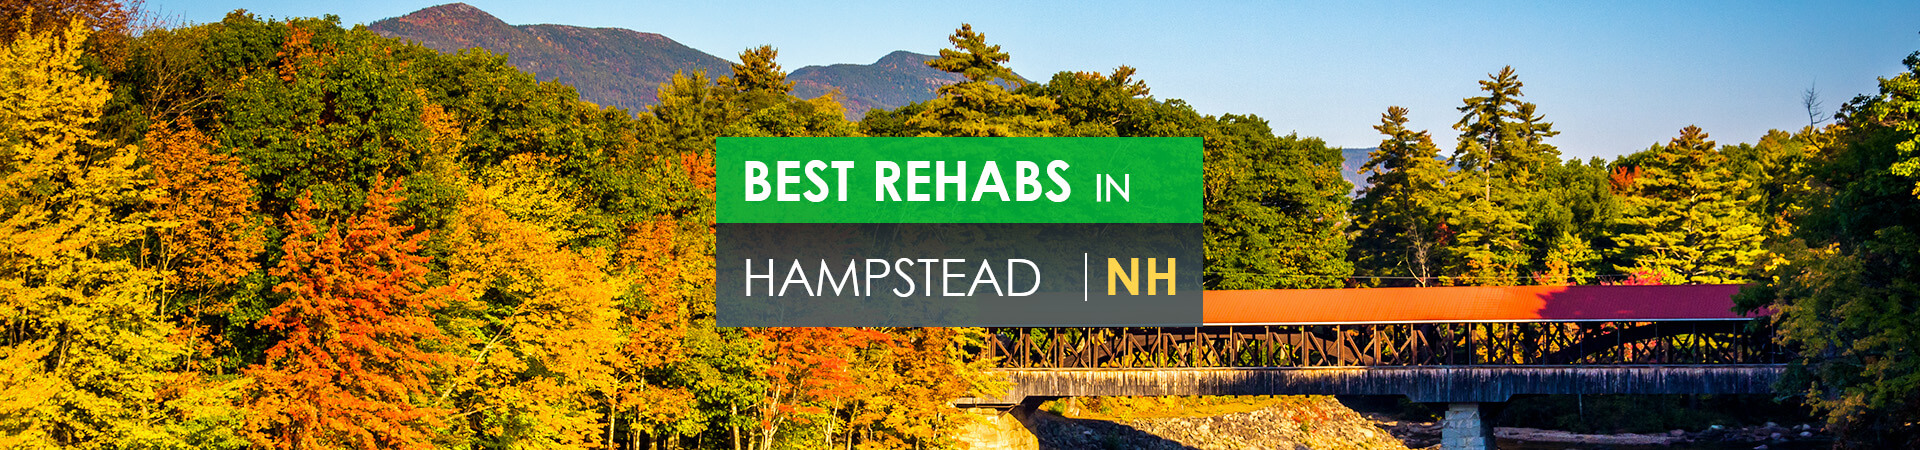 Best rehabs in Hampstead, NH